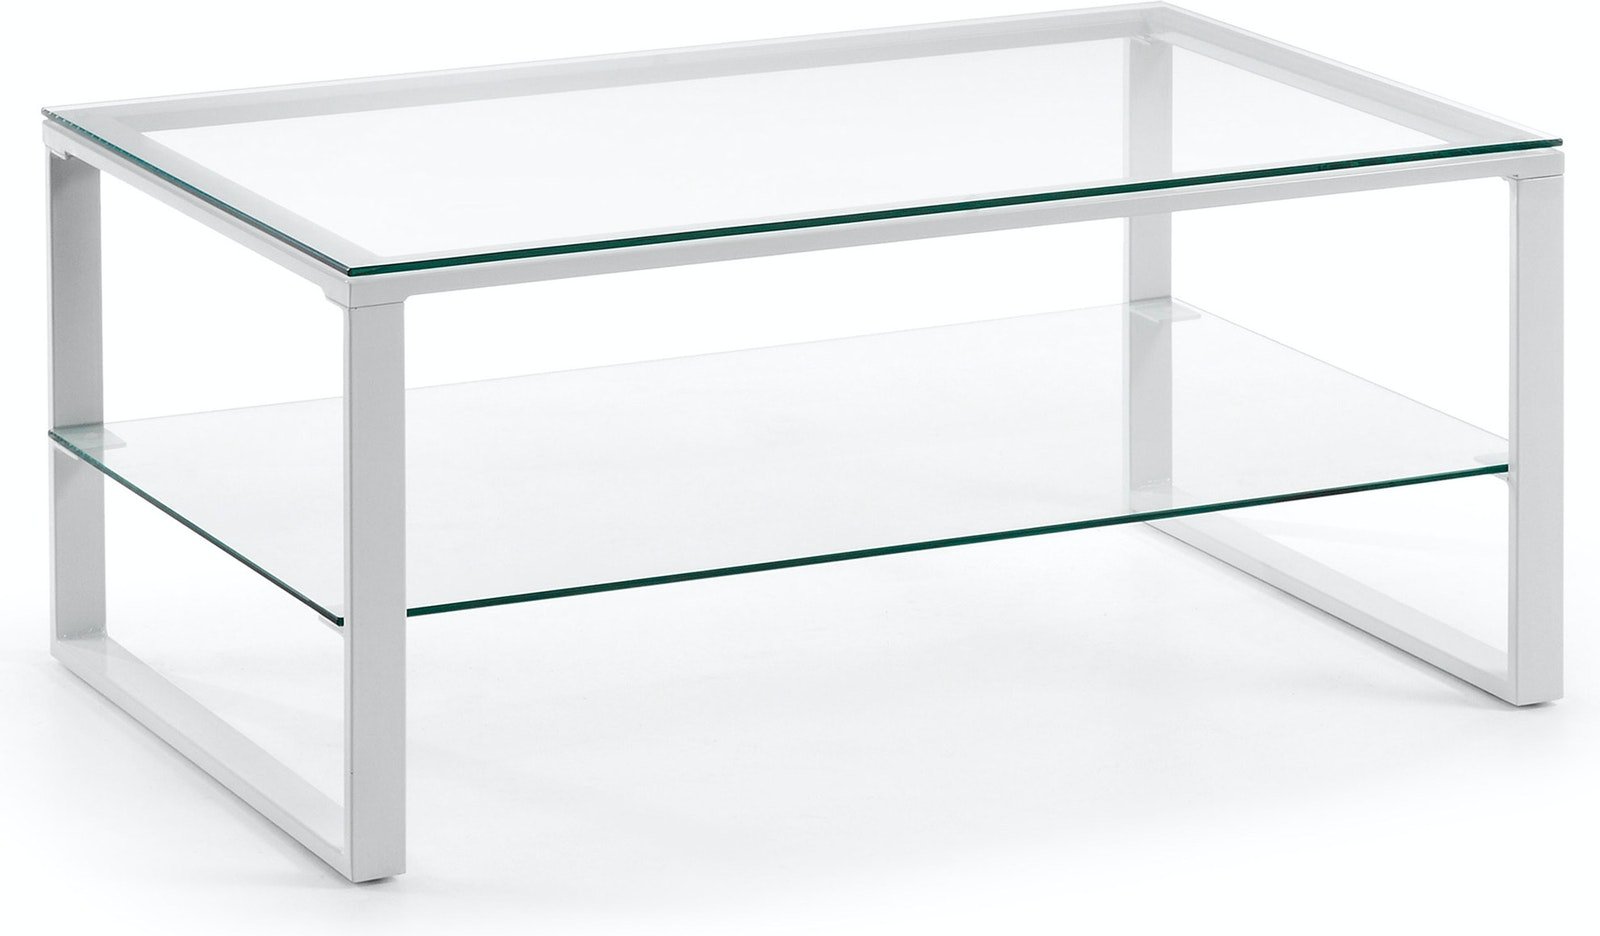 LAFORMA Navis sofabord, m. hylde, rektangulær - glas og hvidt epoxy malet stål (55x90)